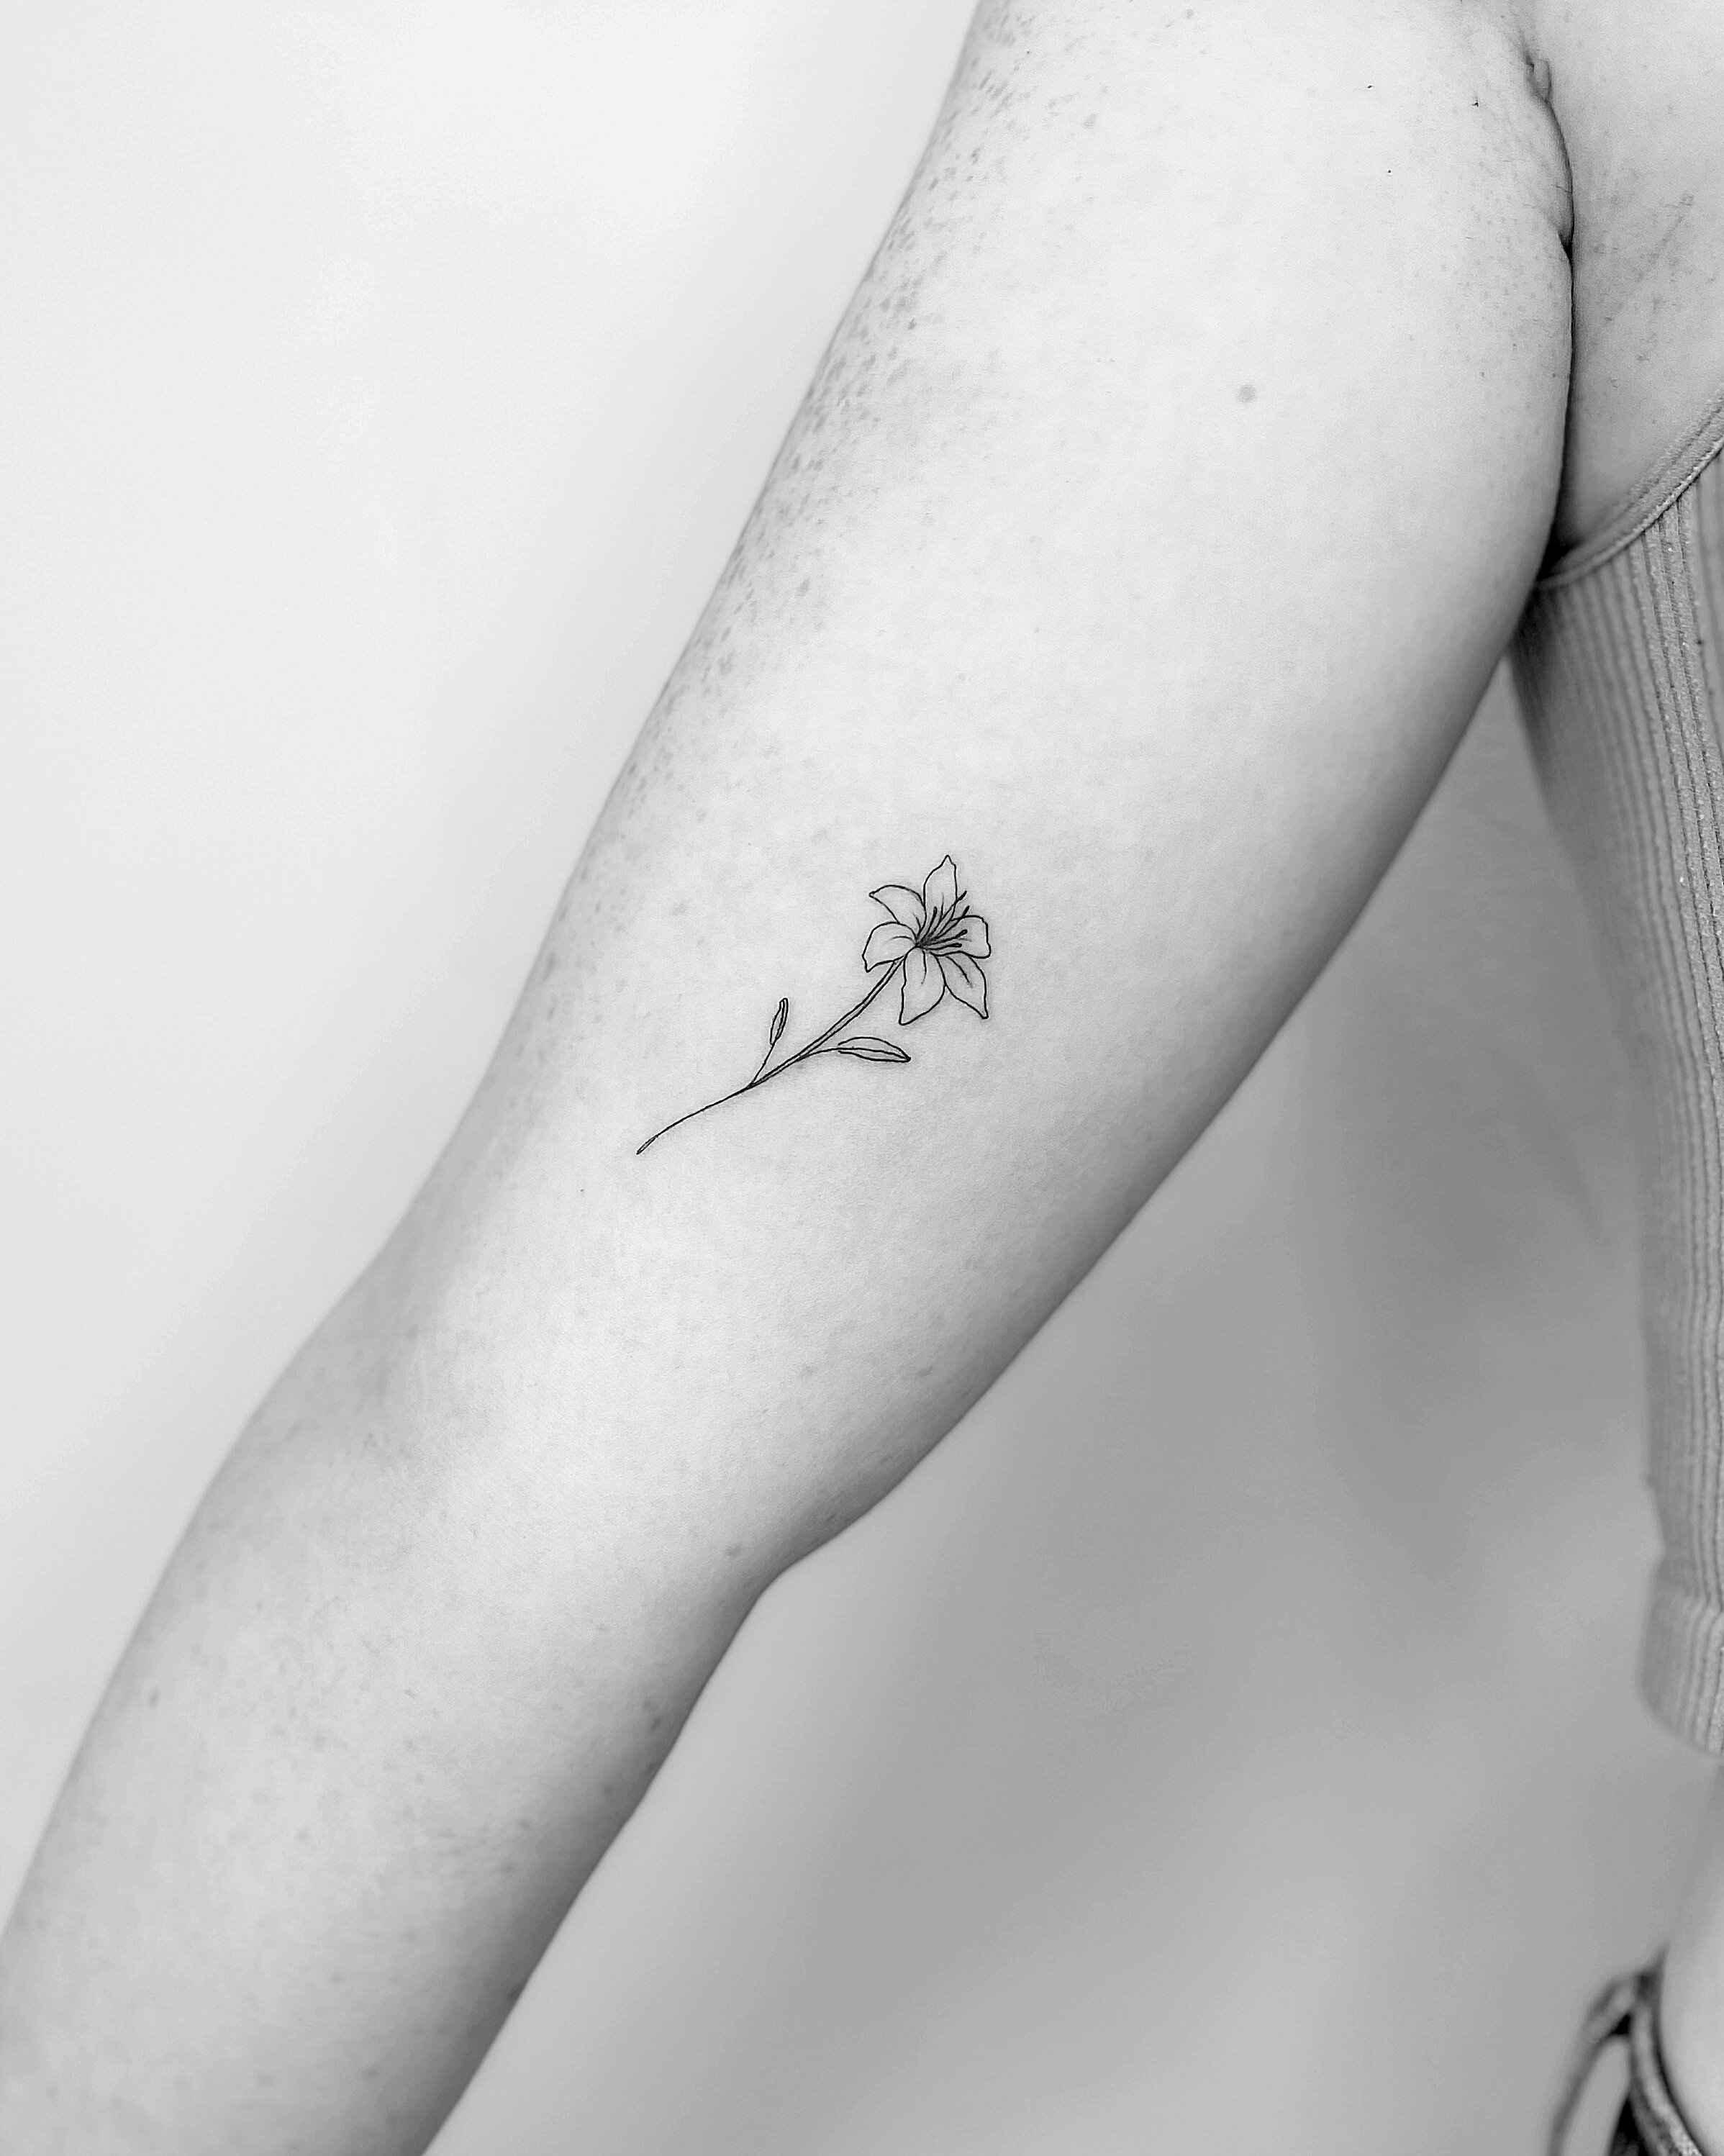 fine line tattoo of a flower